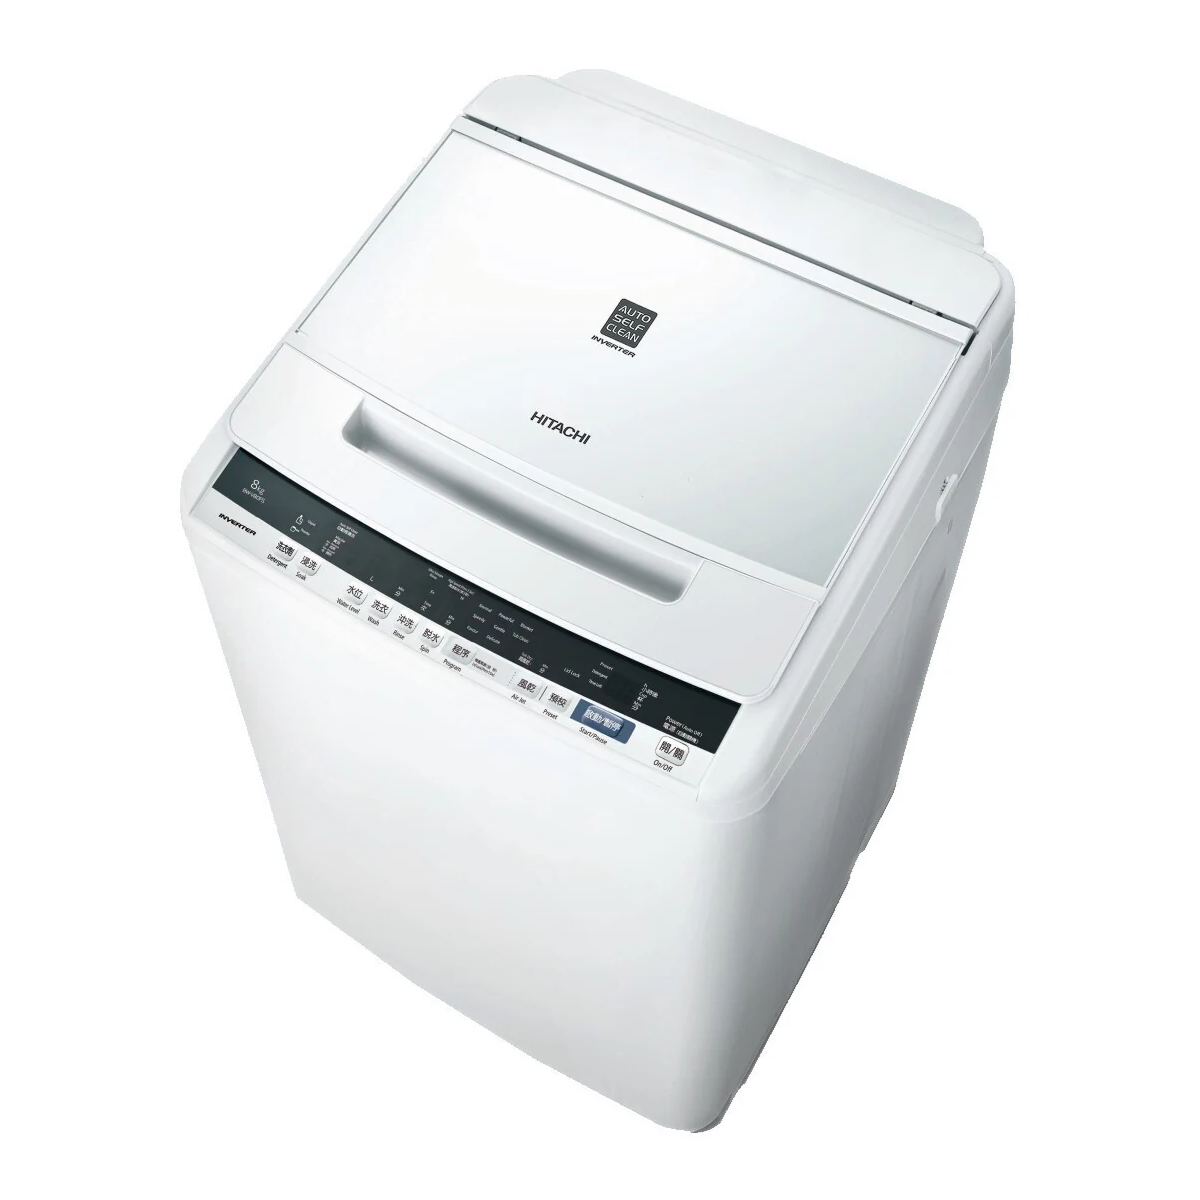 HITACHI 8KG上置式洗衣機 BWV80FS-W 白色